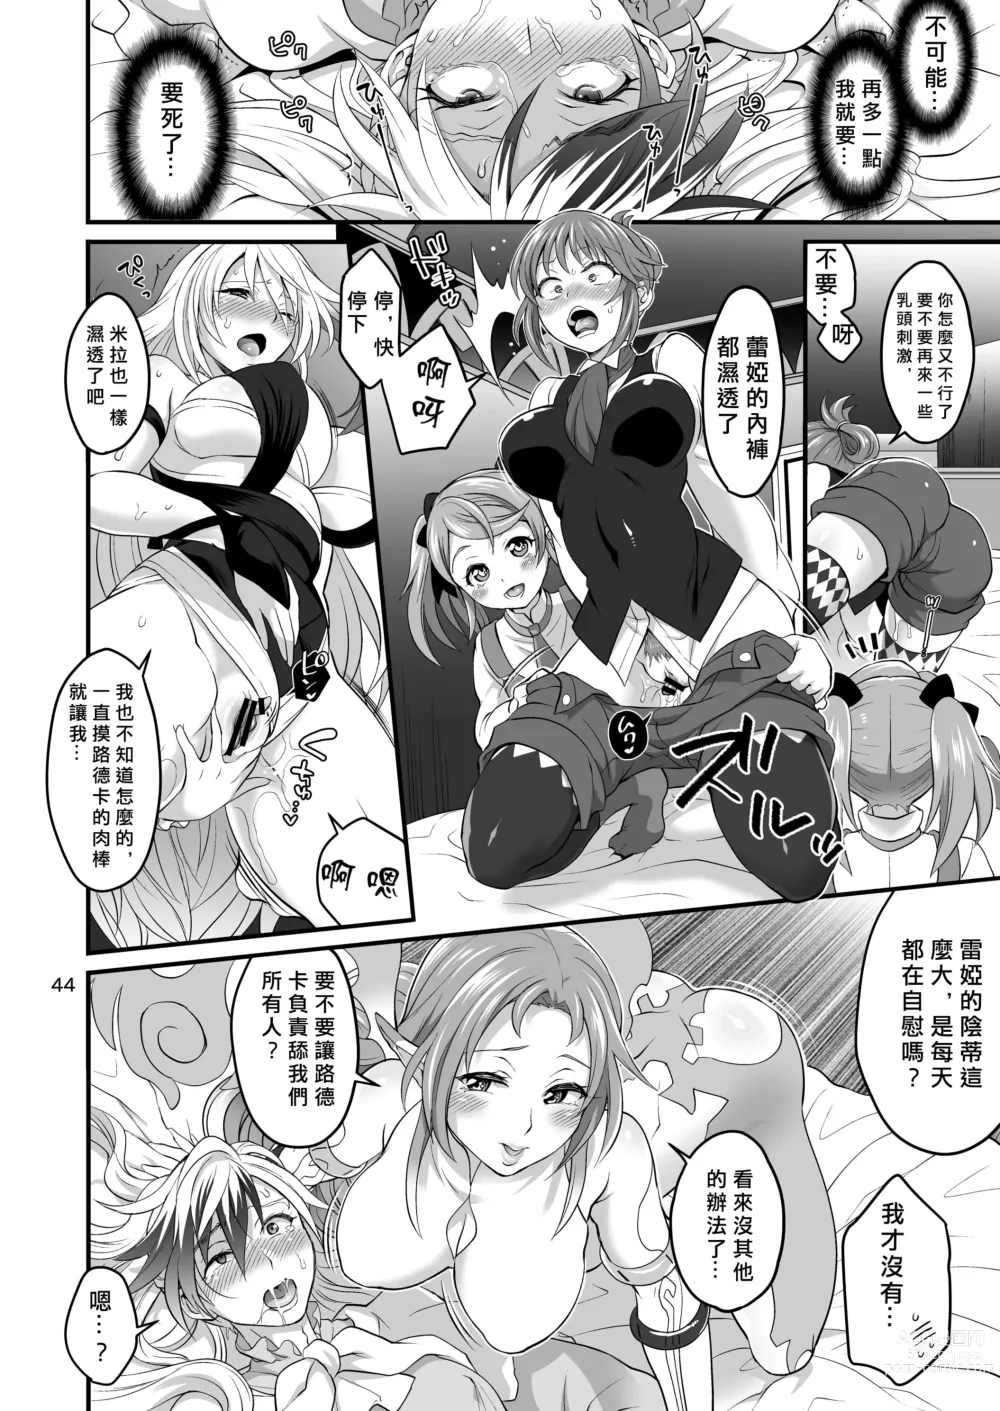 Page 44 of doujinshi 八方美人極